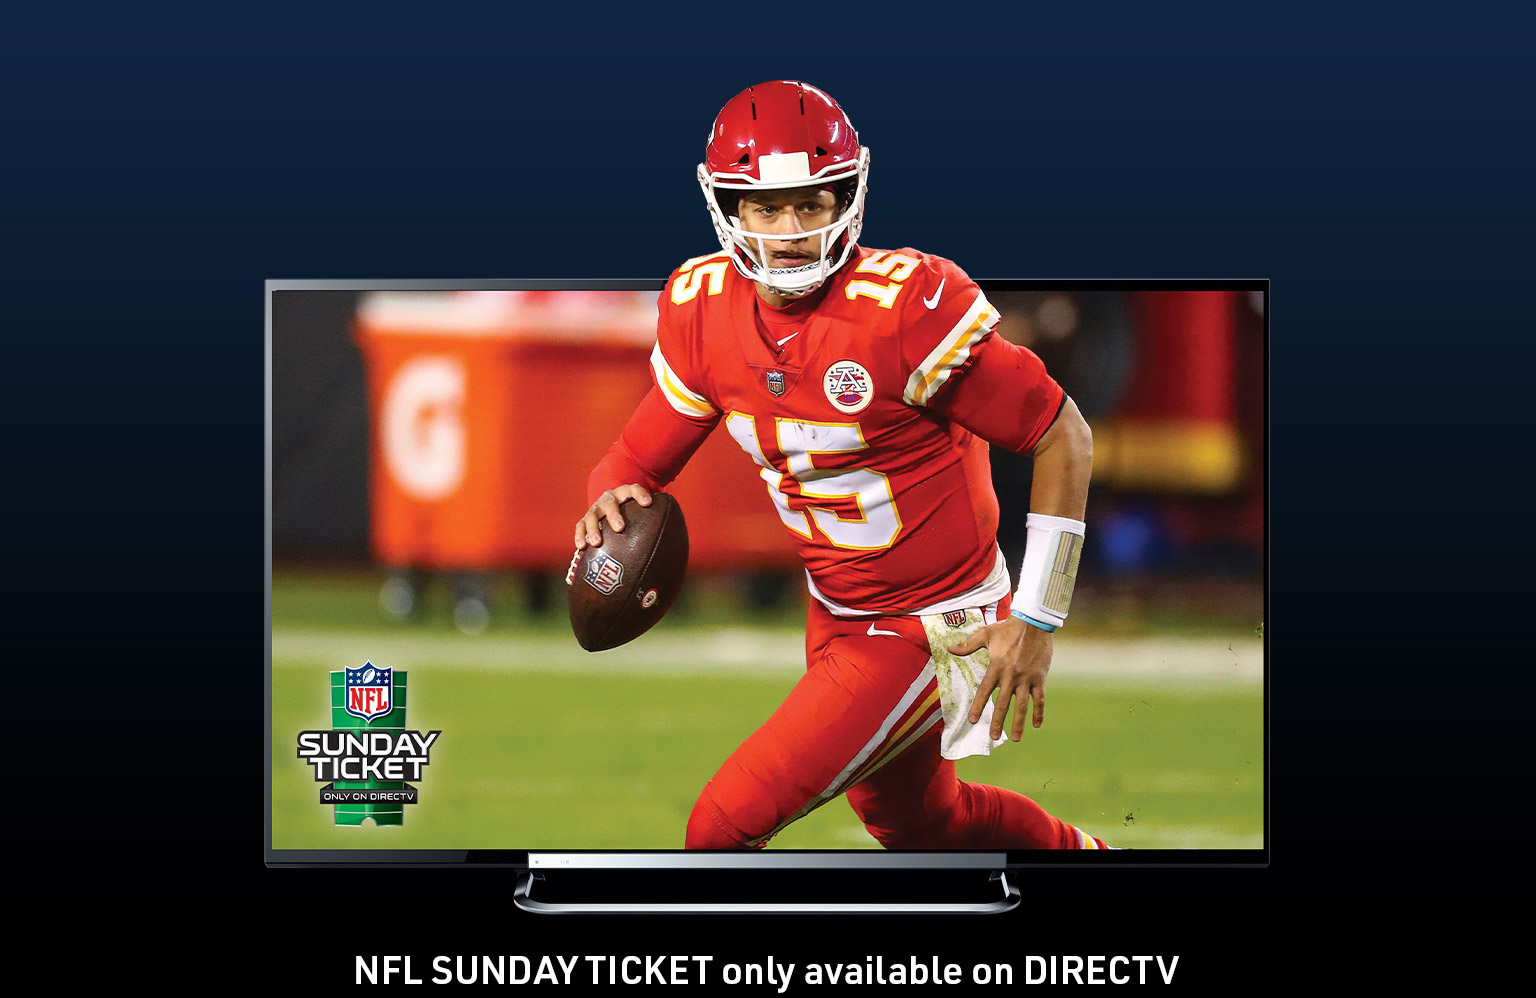 homepage hero TV screen of NFL player